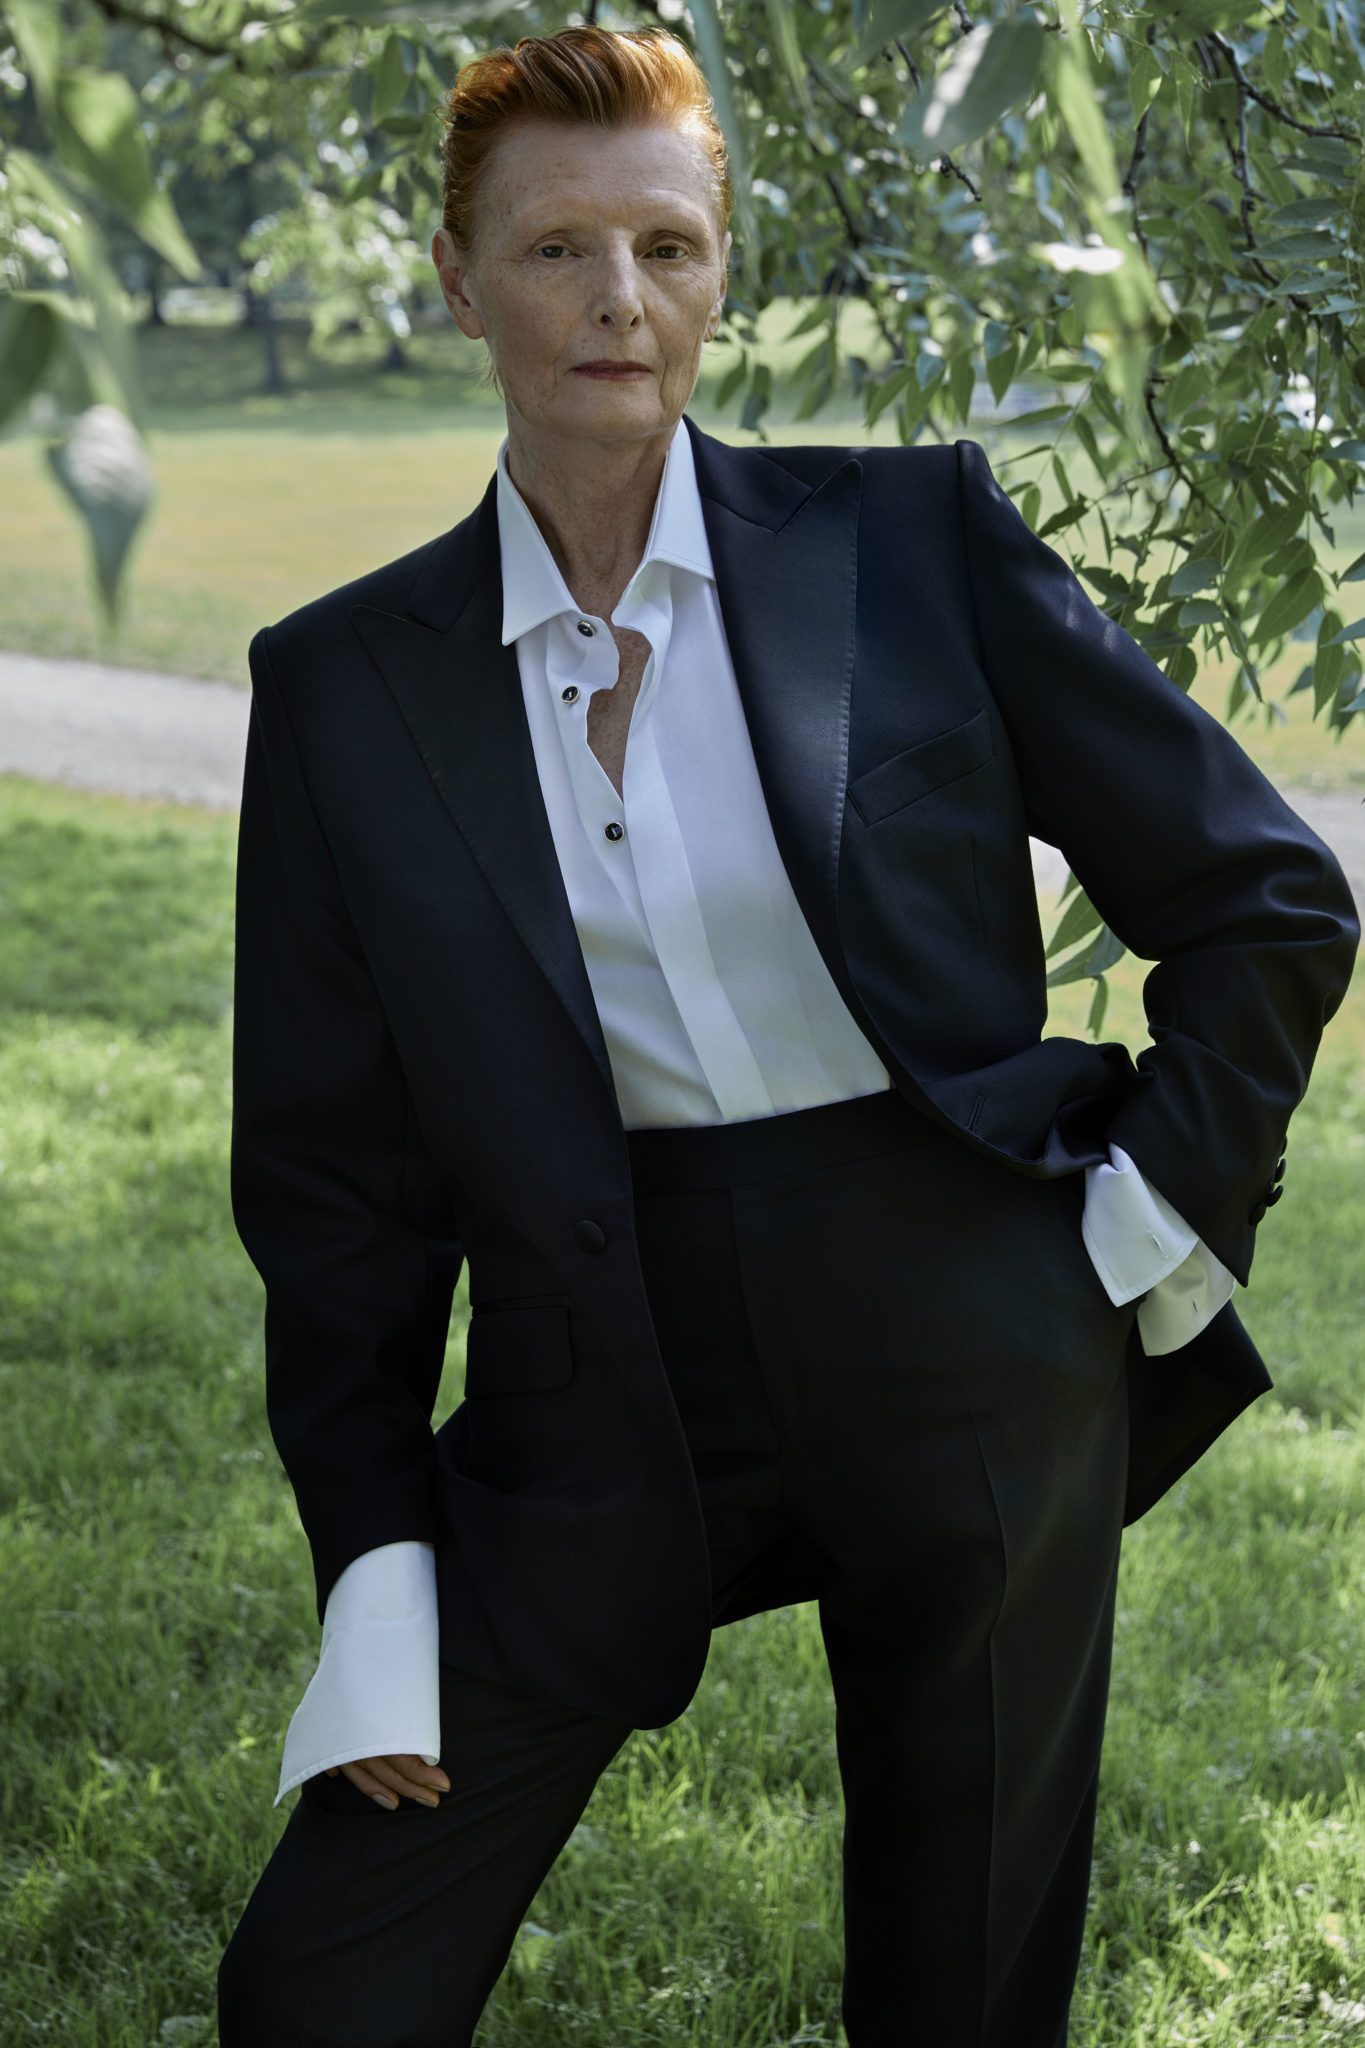 Custom-made-tuxedo-suit-for-women-by-canadian-designer-maria-karimi